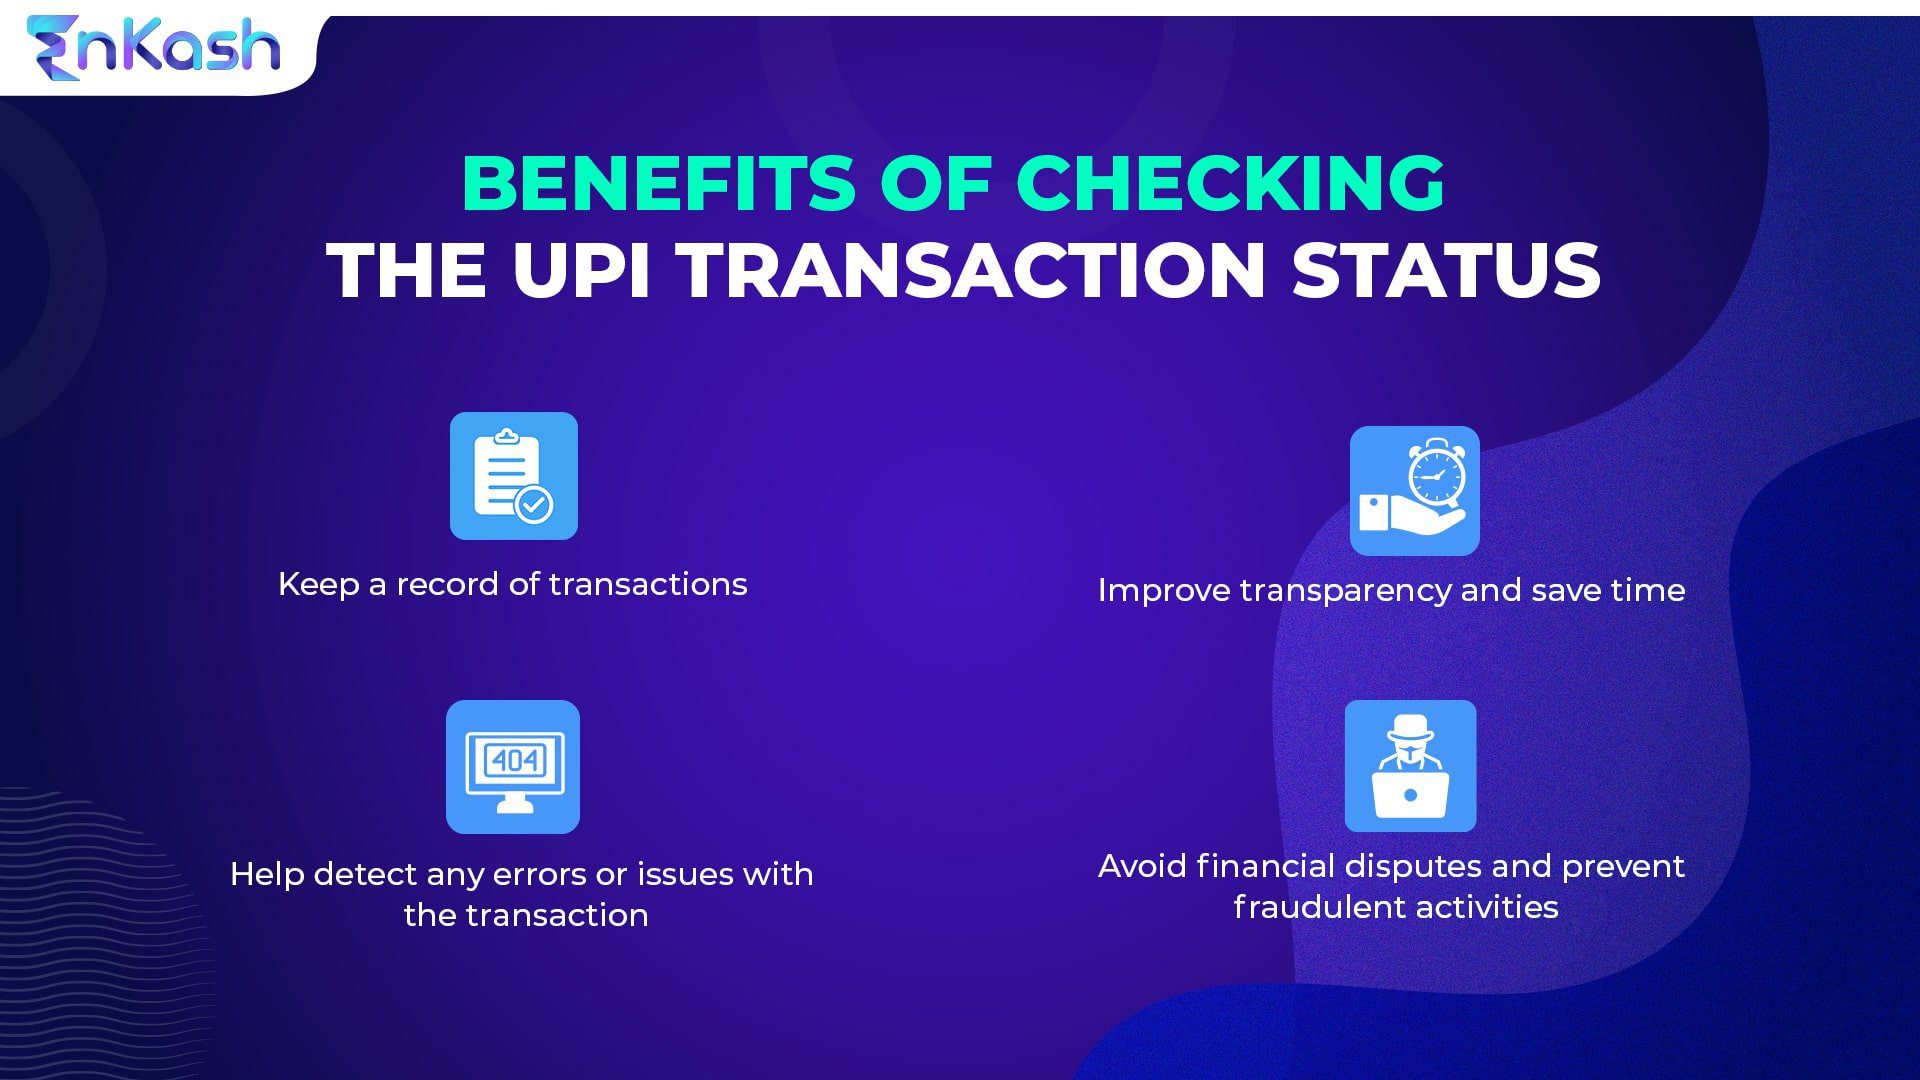 Benefits of checking the UPI transaction status